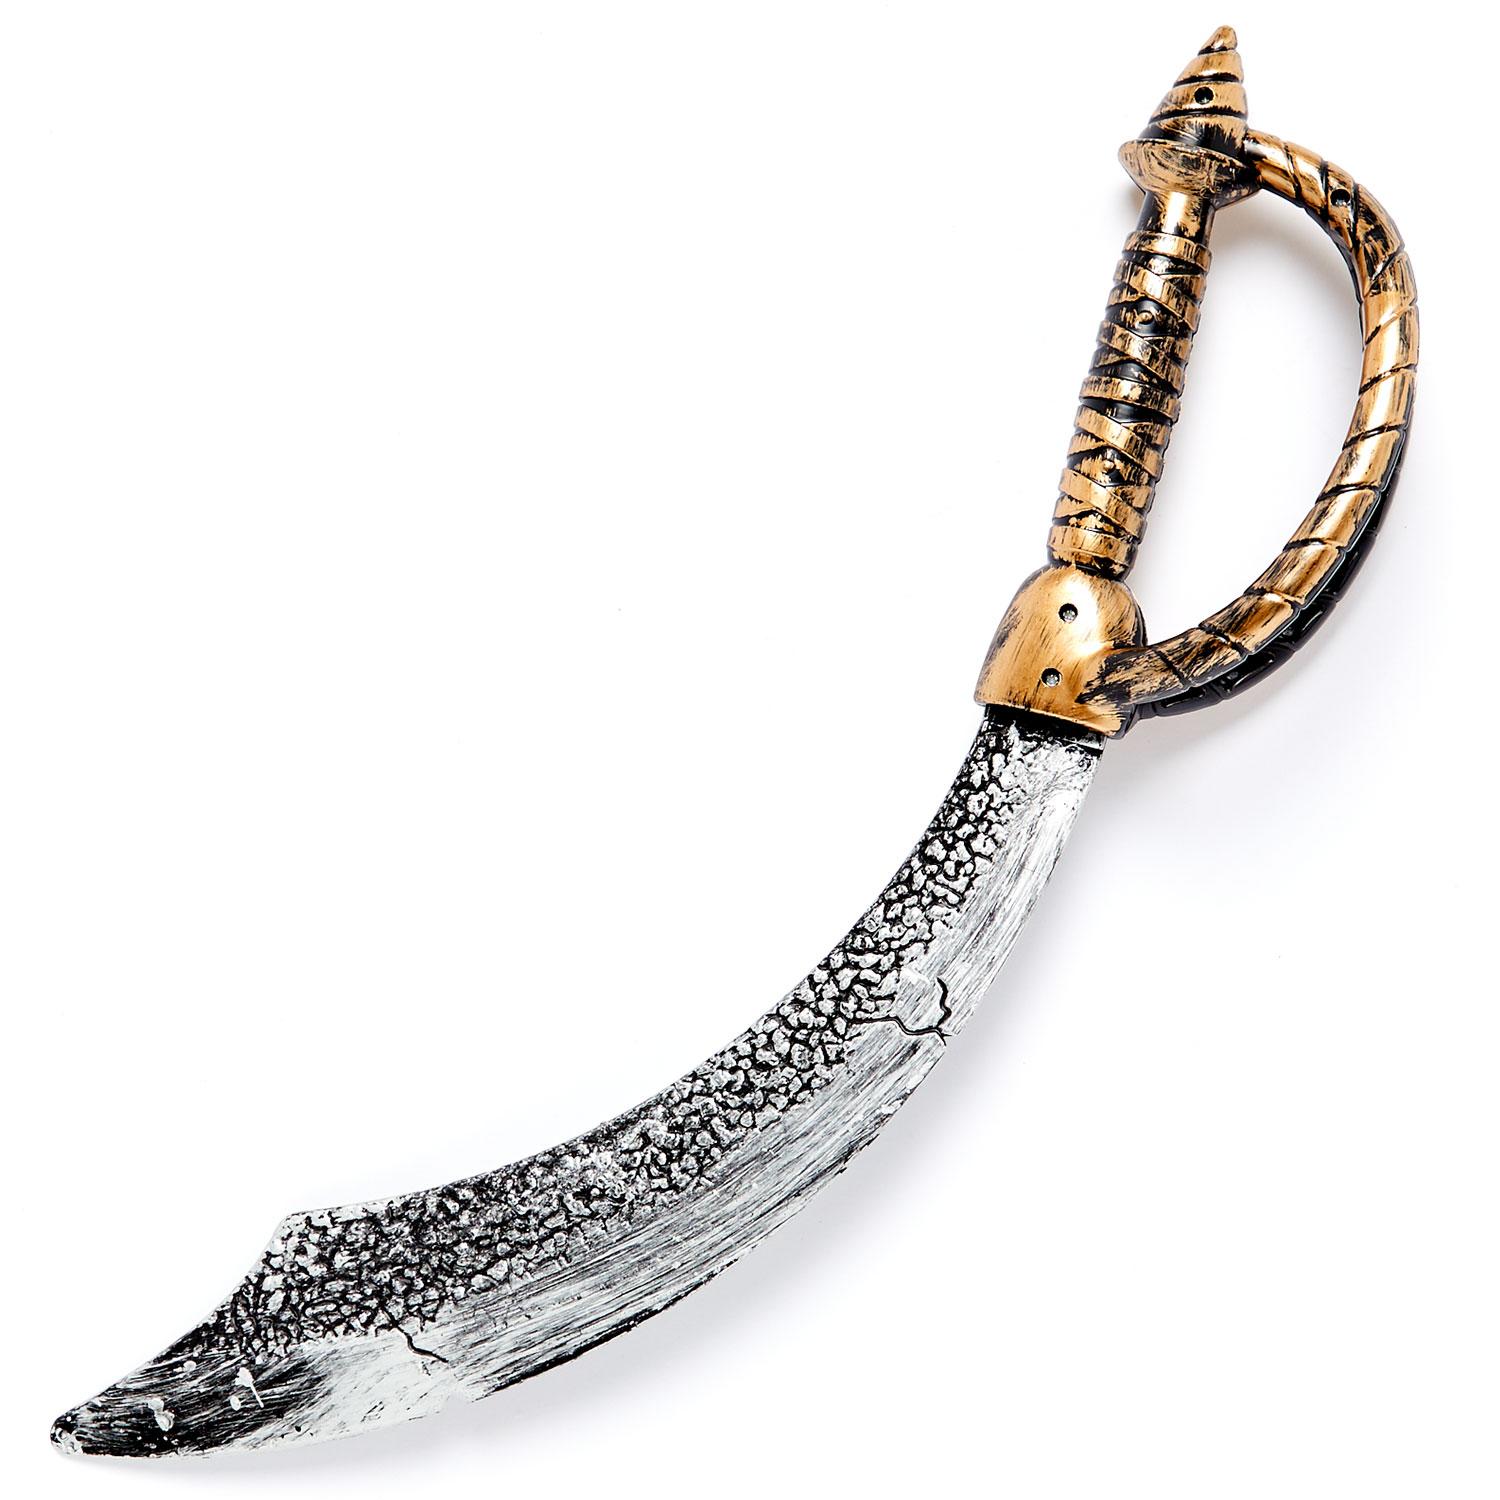 Pirate Sword Silver/Gold